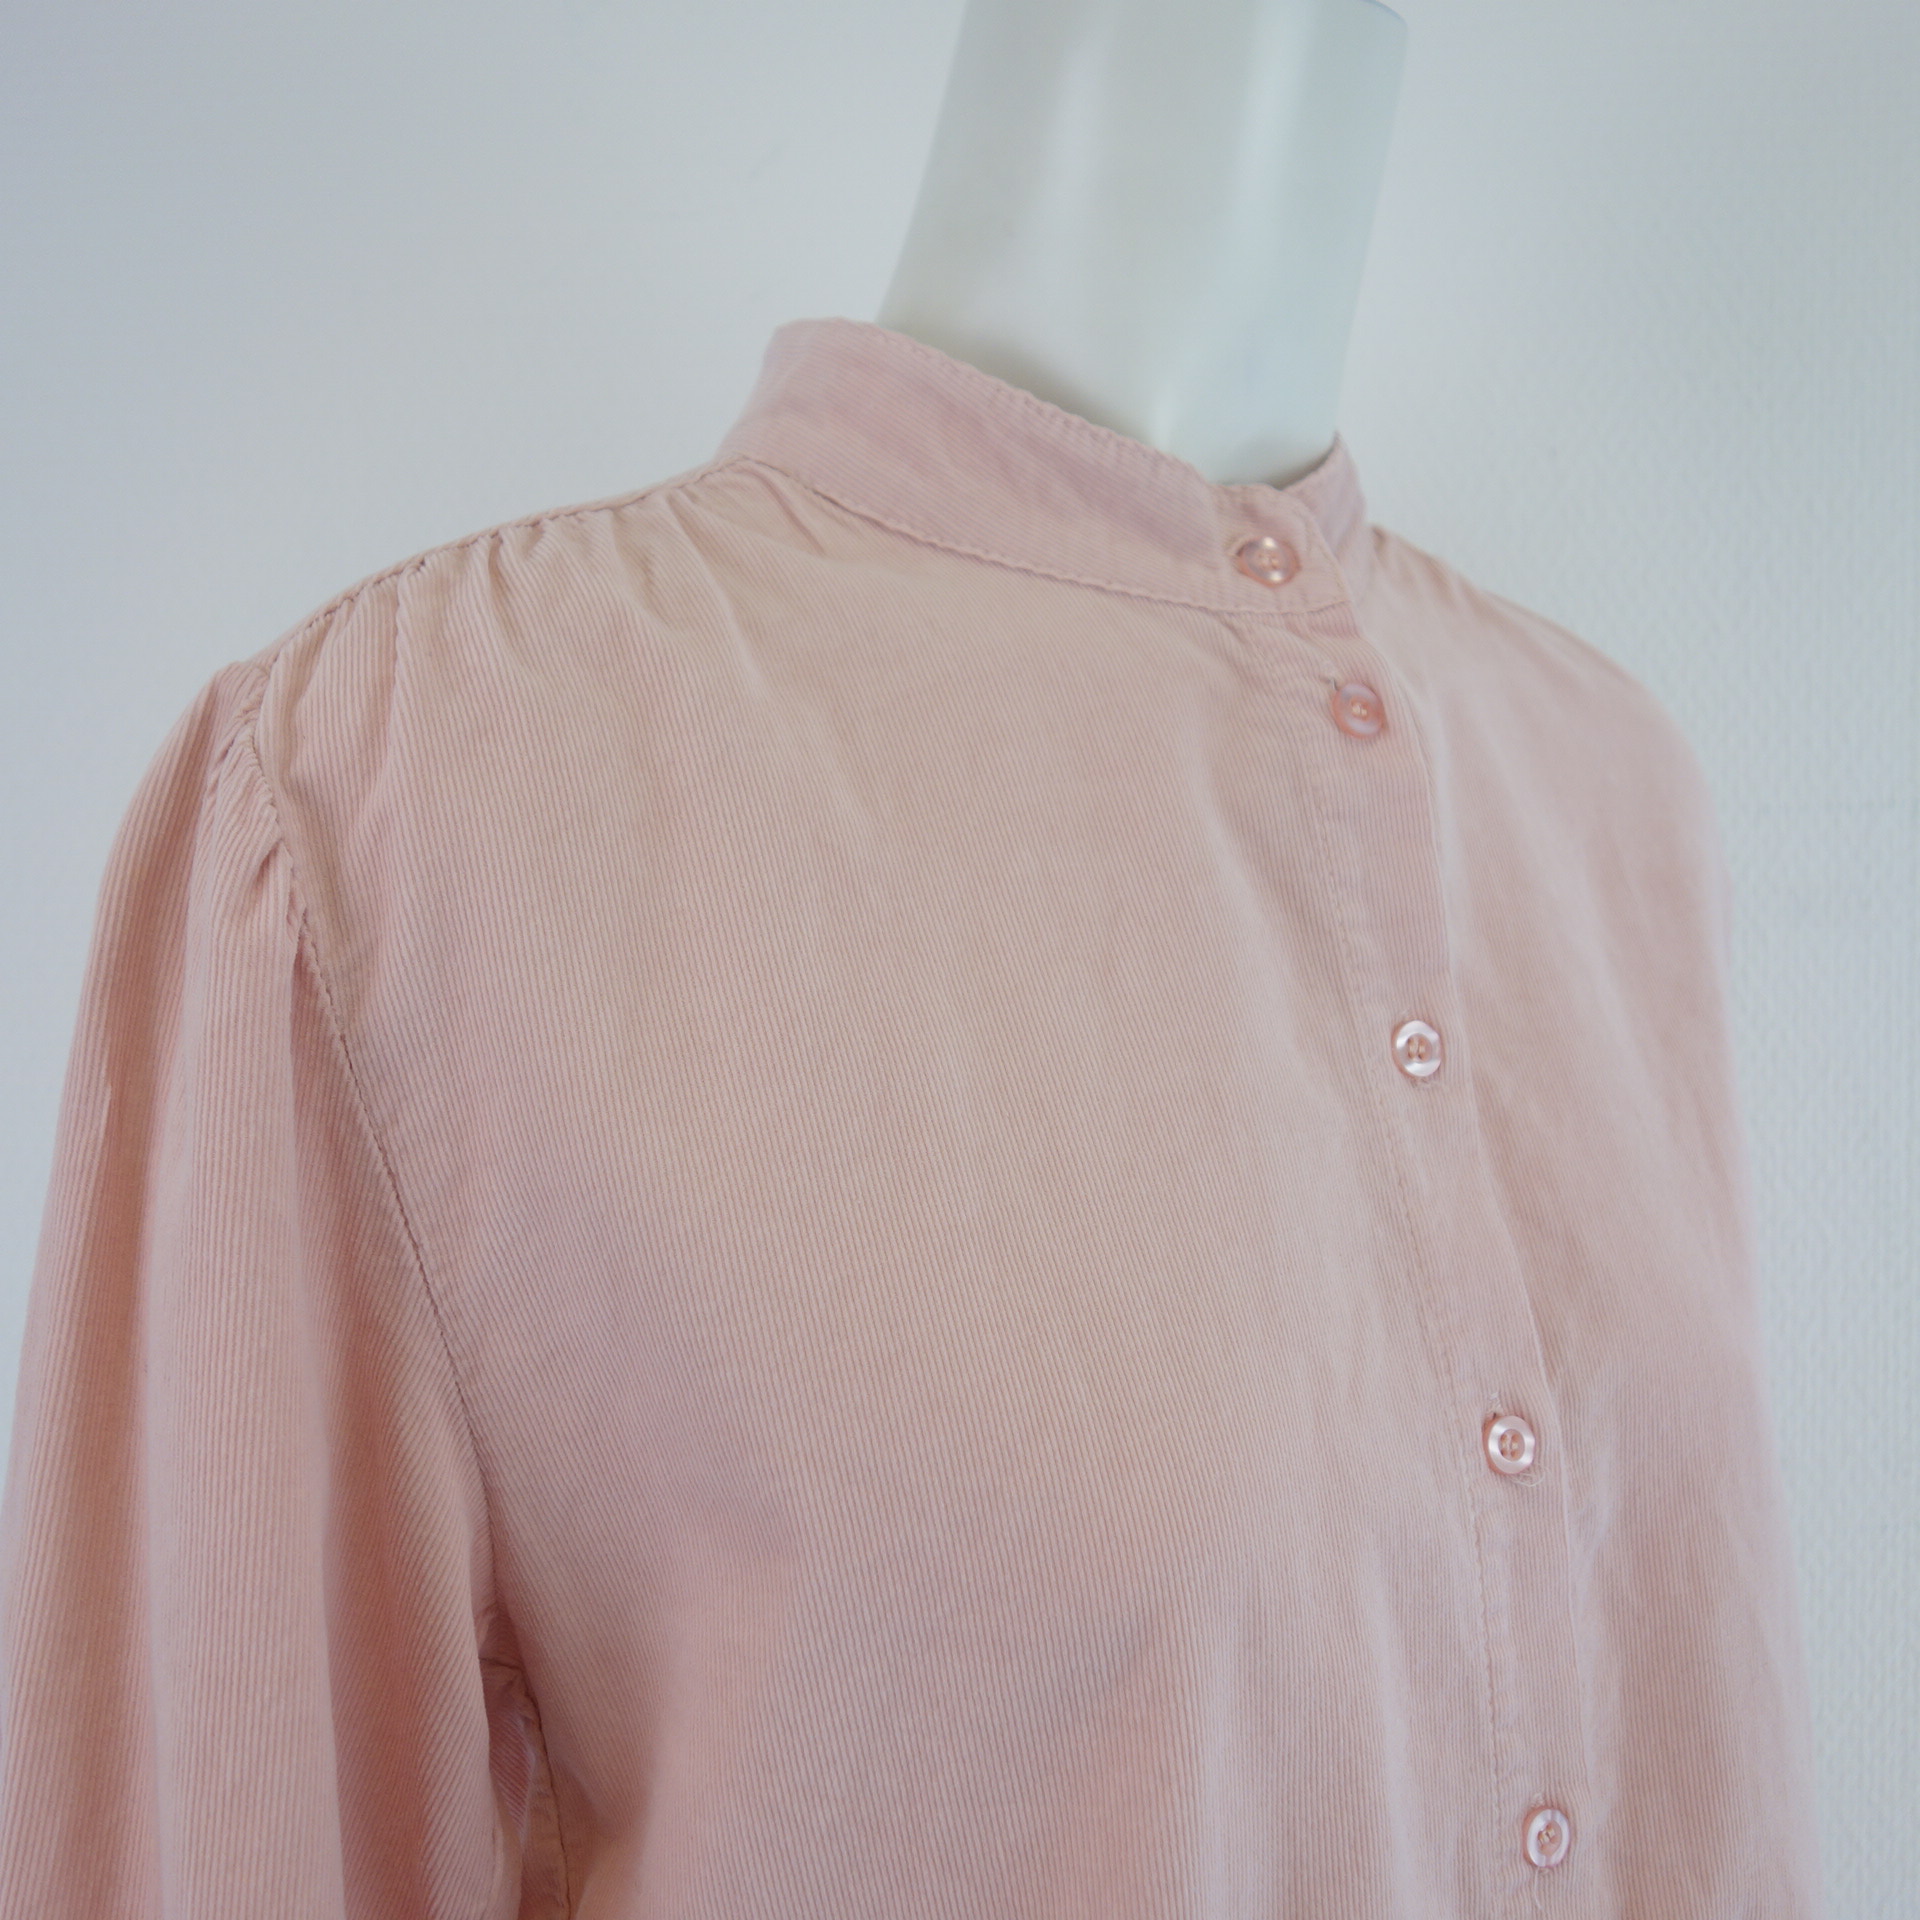 TIFFANY Dänemark Damen Cord Bluse Hemd Shirt Cordhemd Rose Gr S Baumwolle